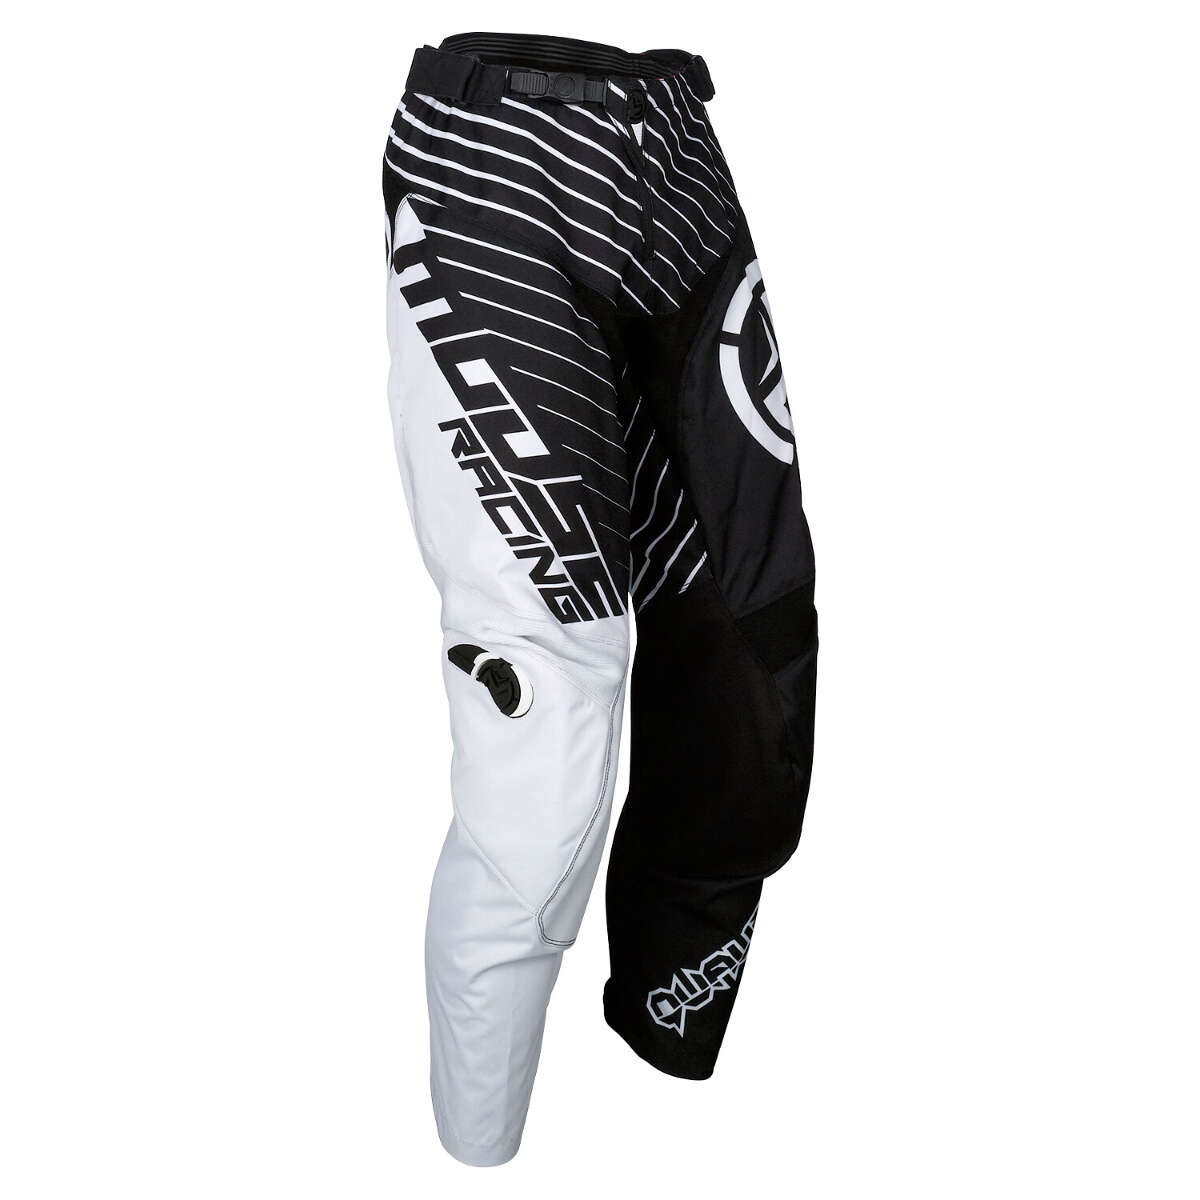 Moose Racing MX Pants Qualifier Black/White - Large Fit